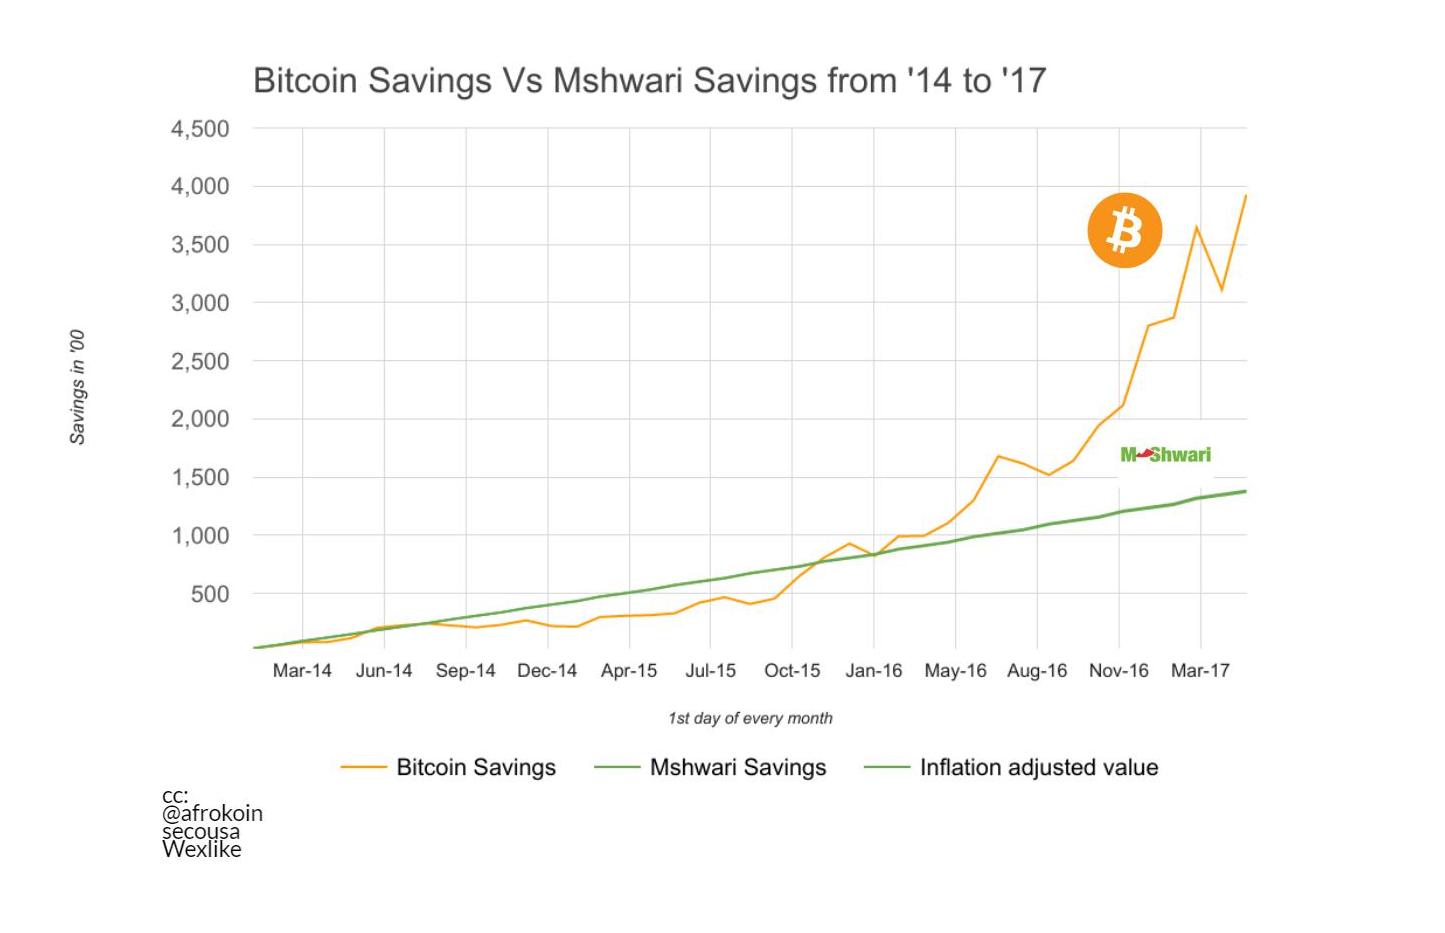 Bitcoin savings vs Mshwari savings